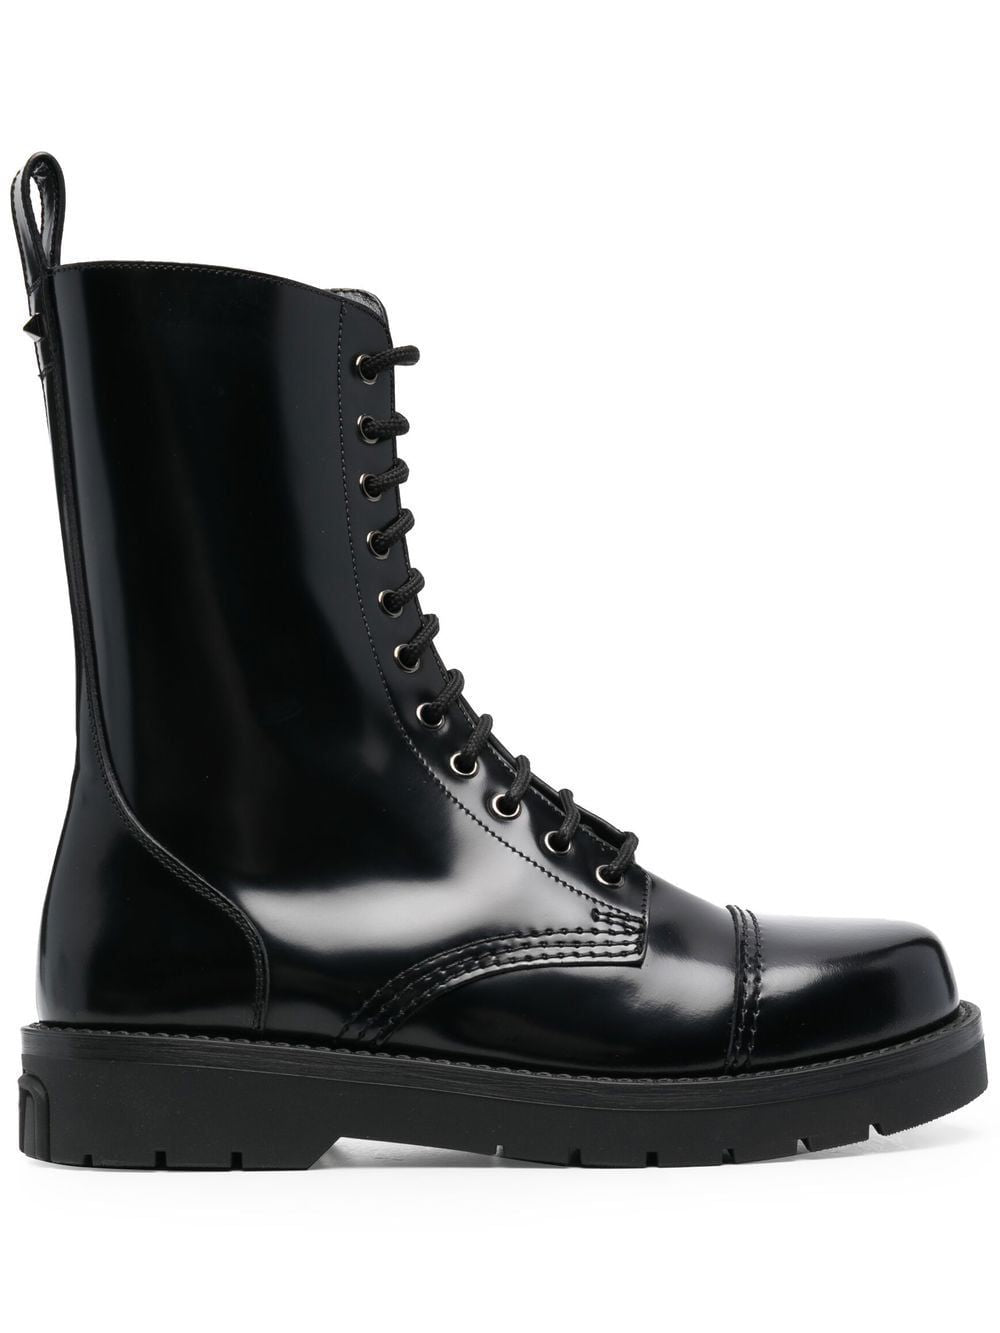 VALENTINO GARAVANI Stylish Black Combat Boots for Men - FW22 Collection